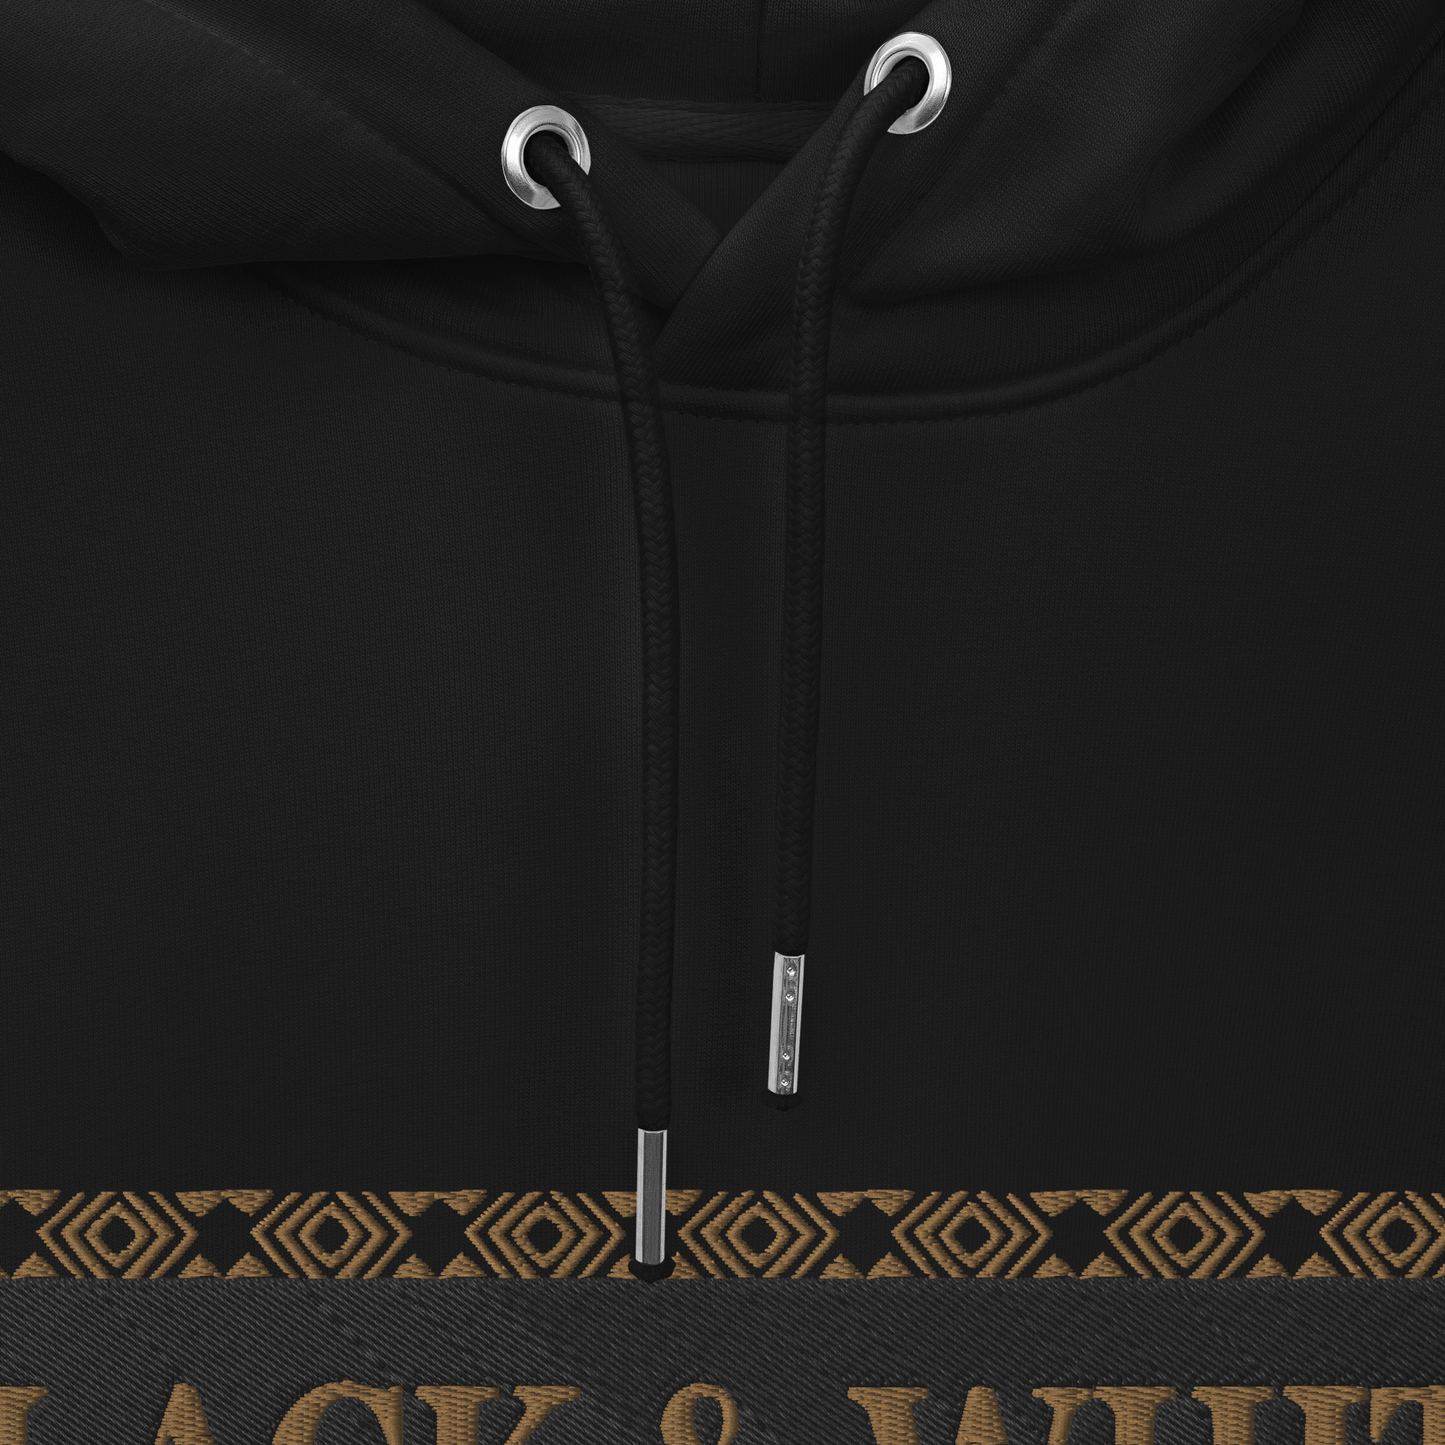 Embroidered black B&W hooded sweatshirt